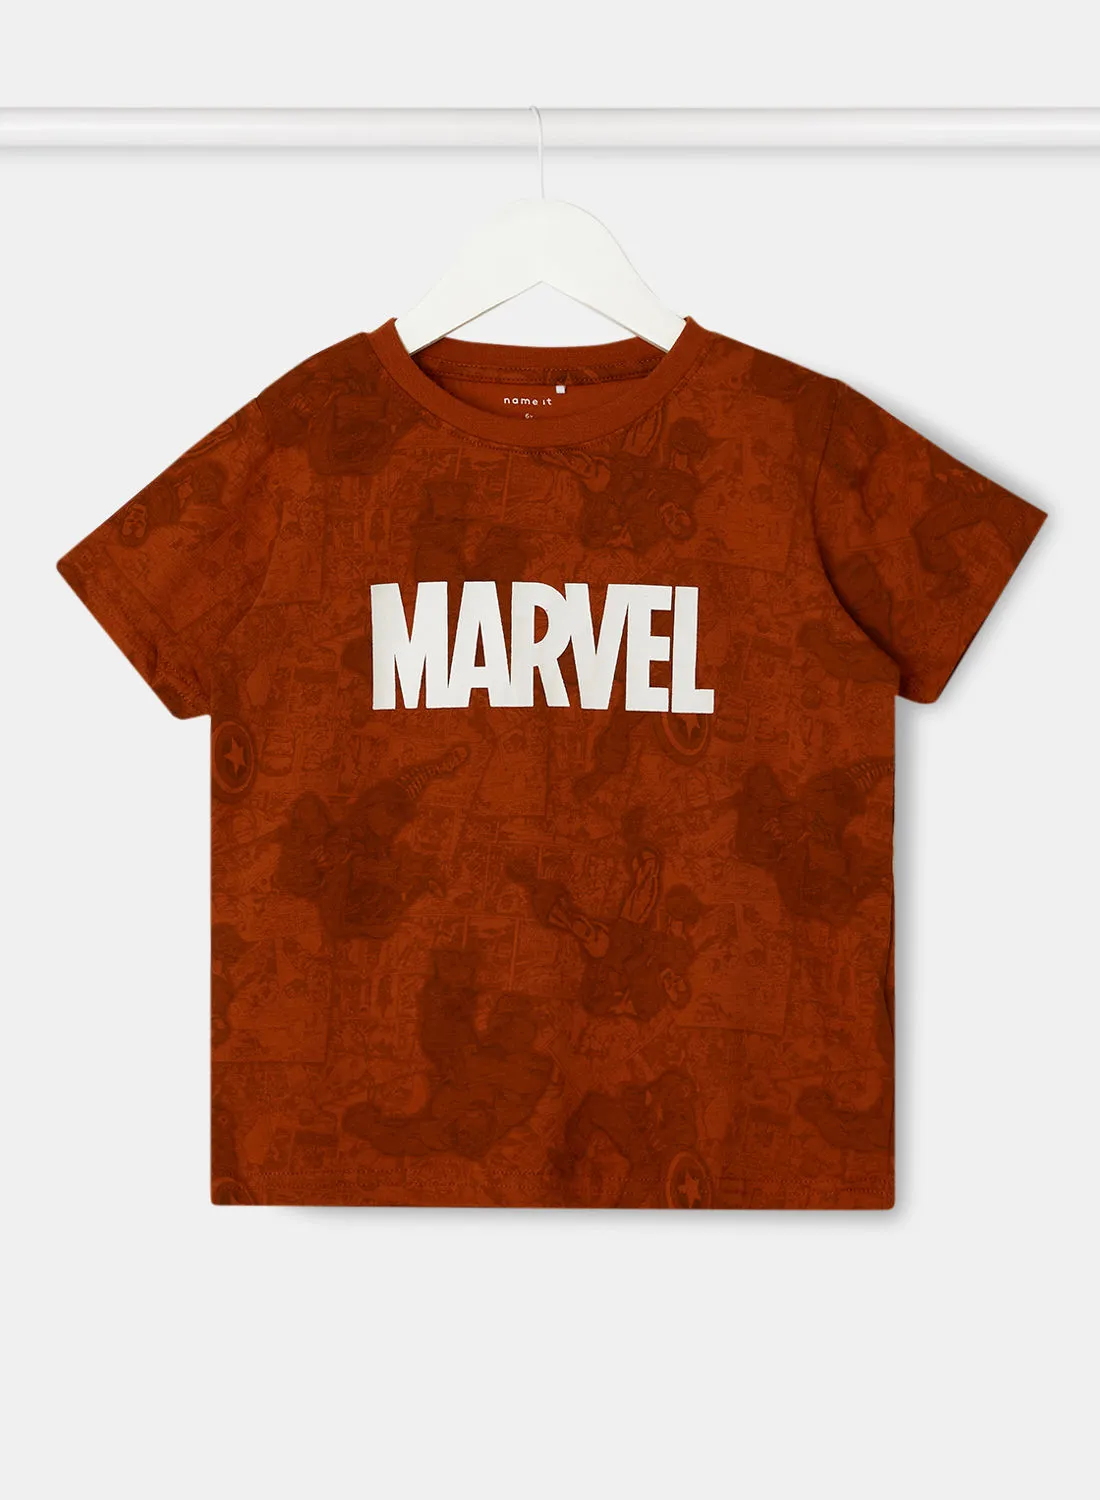 NAME IT Boys Marvel T-Shirt